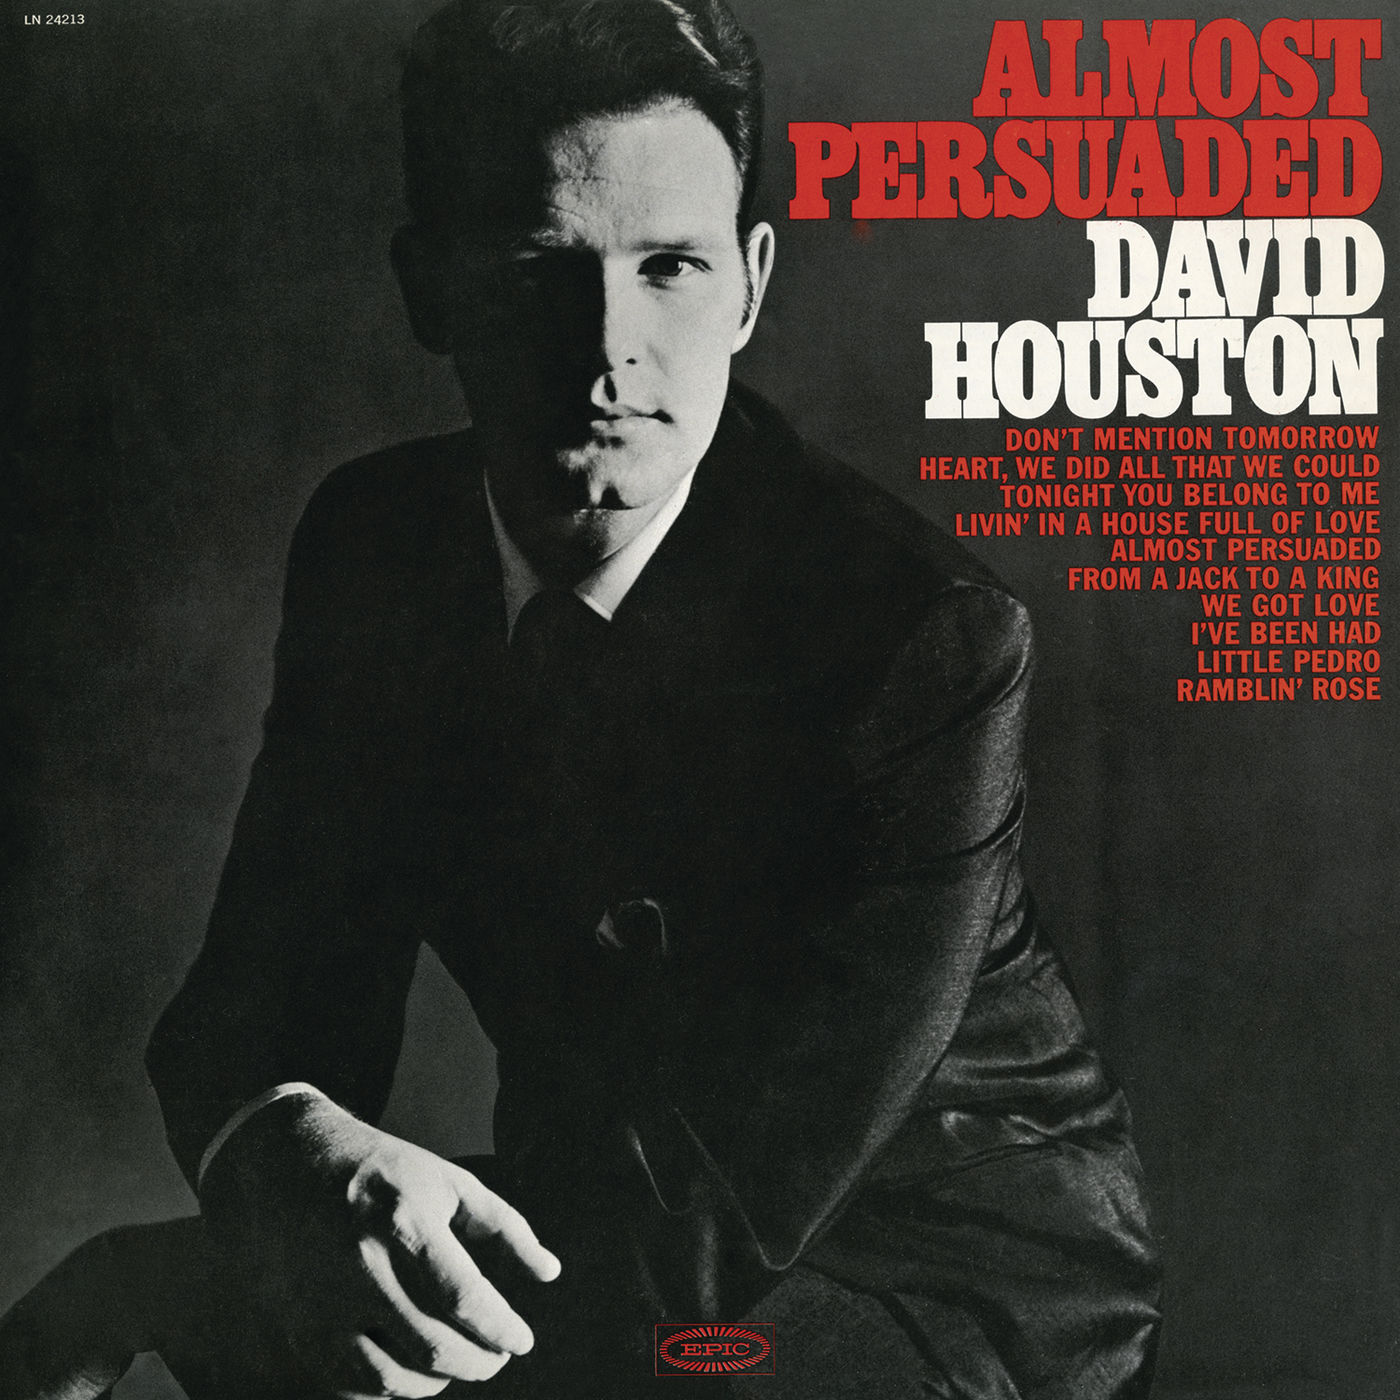 David Houston – Almost Persuaded